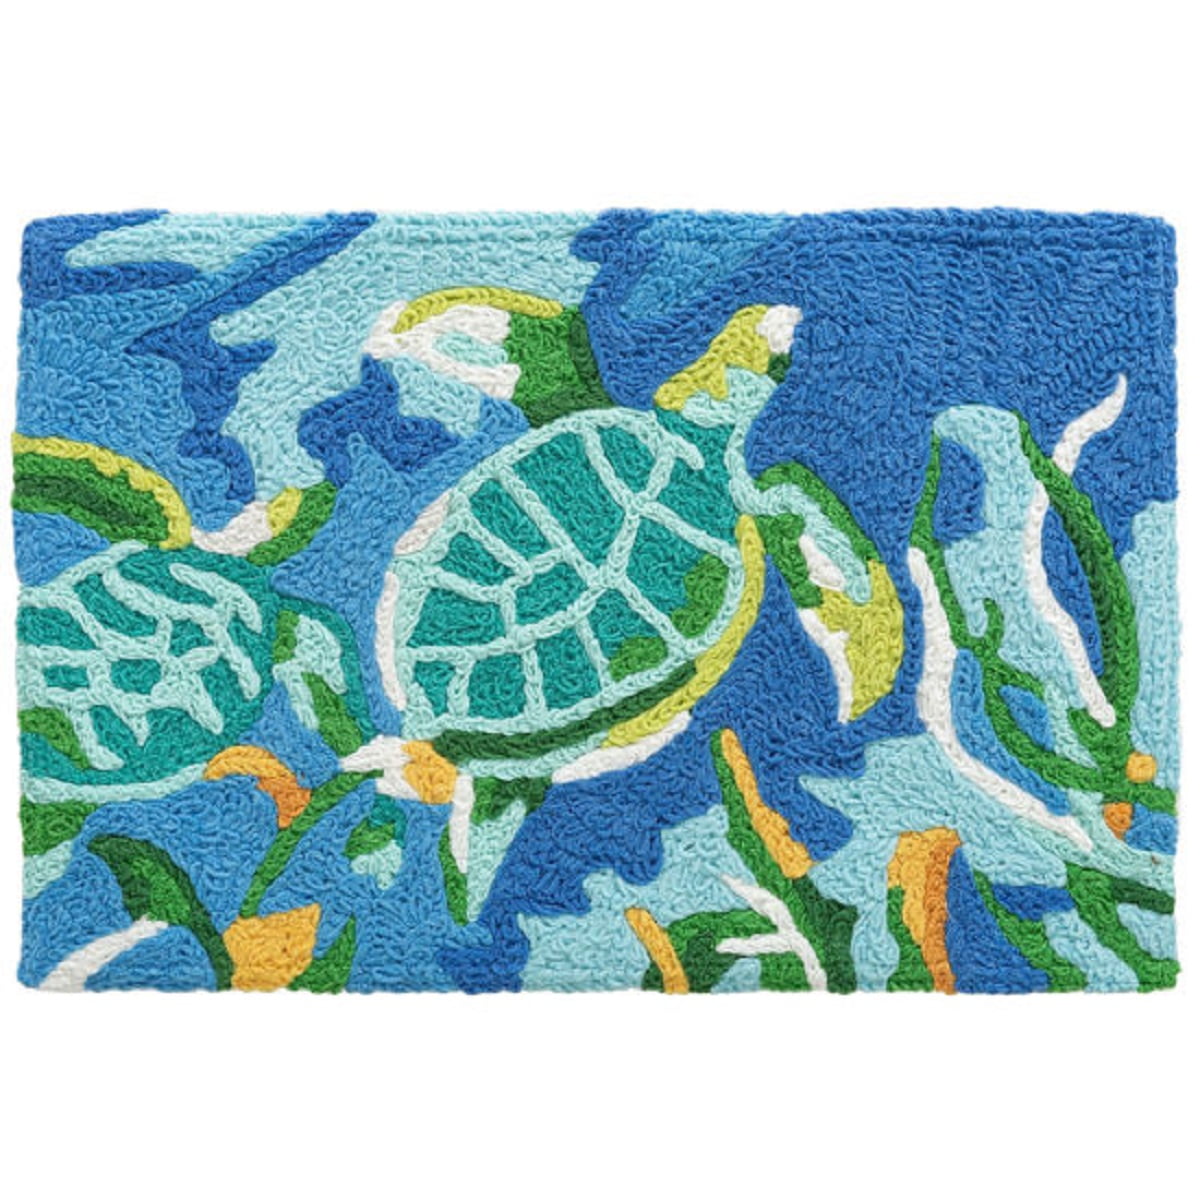 Details about   3D Sea Turtle 7 Non Slip Rug Mat Room Mat Round Quality Elegant Photo Carpet US 